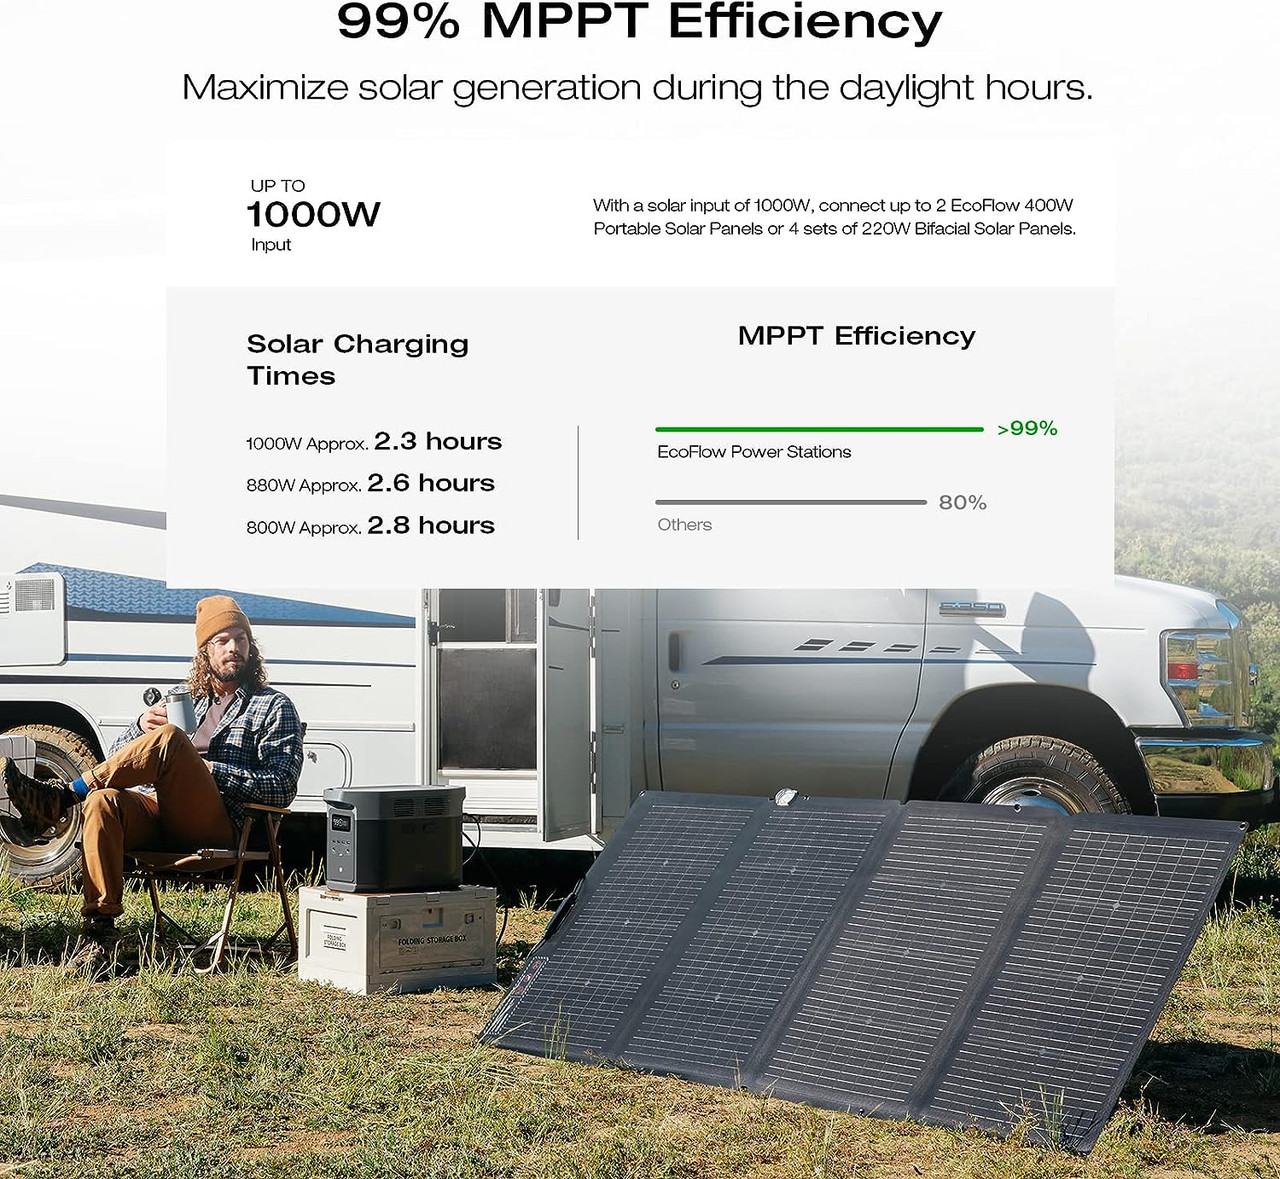 EcoFlow DELTA Max + 400W Portable Solar Panel - The Prepper